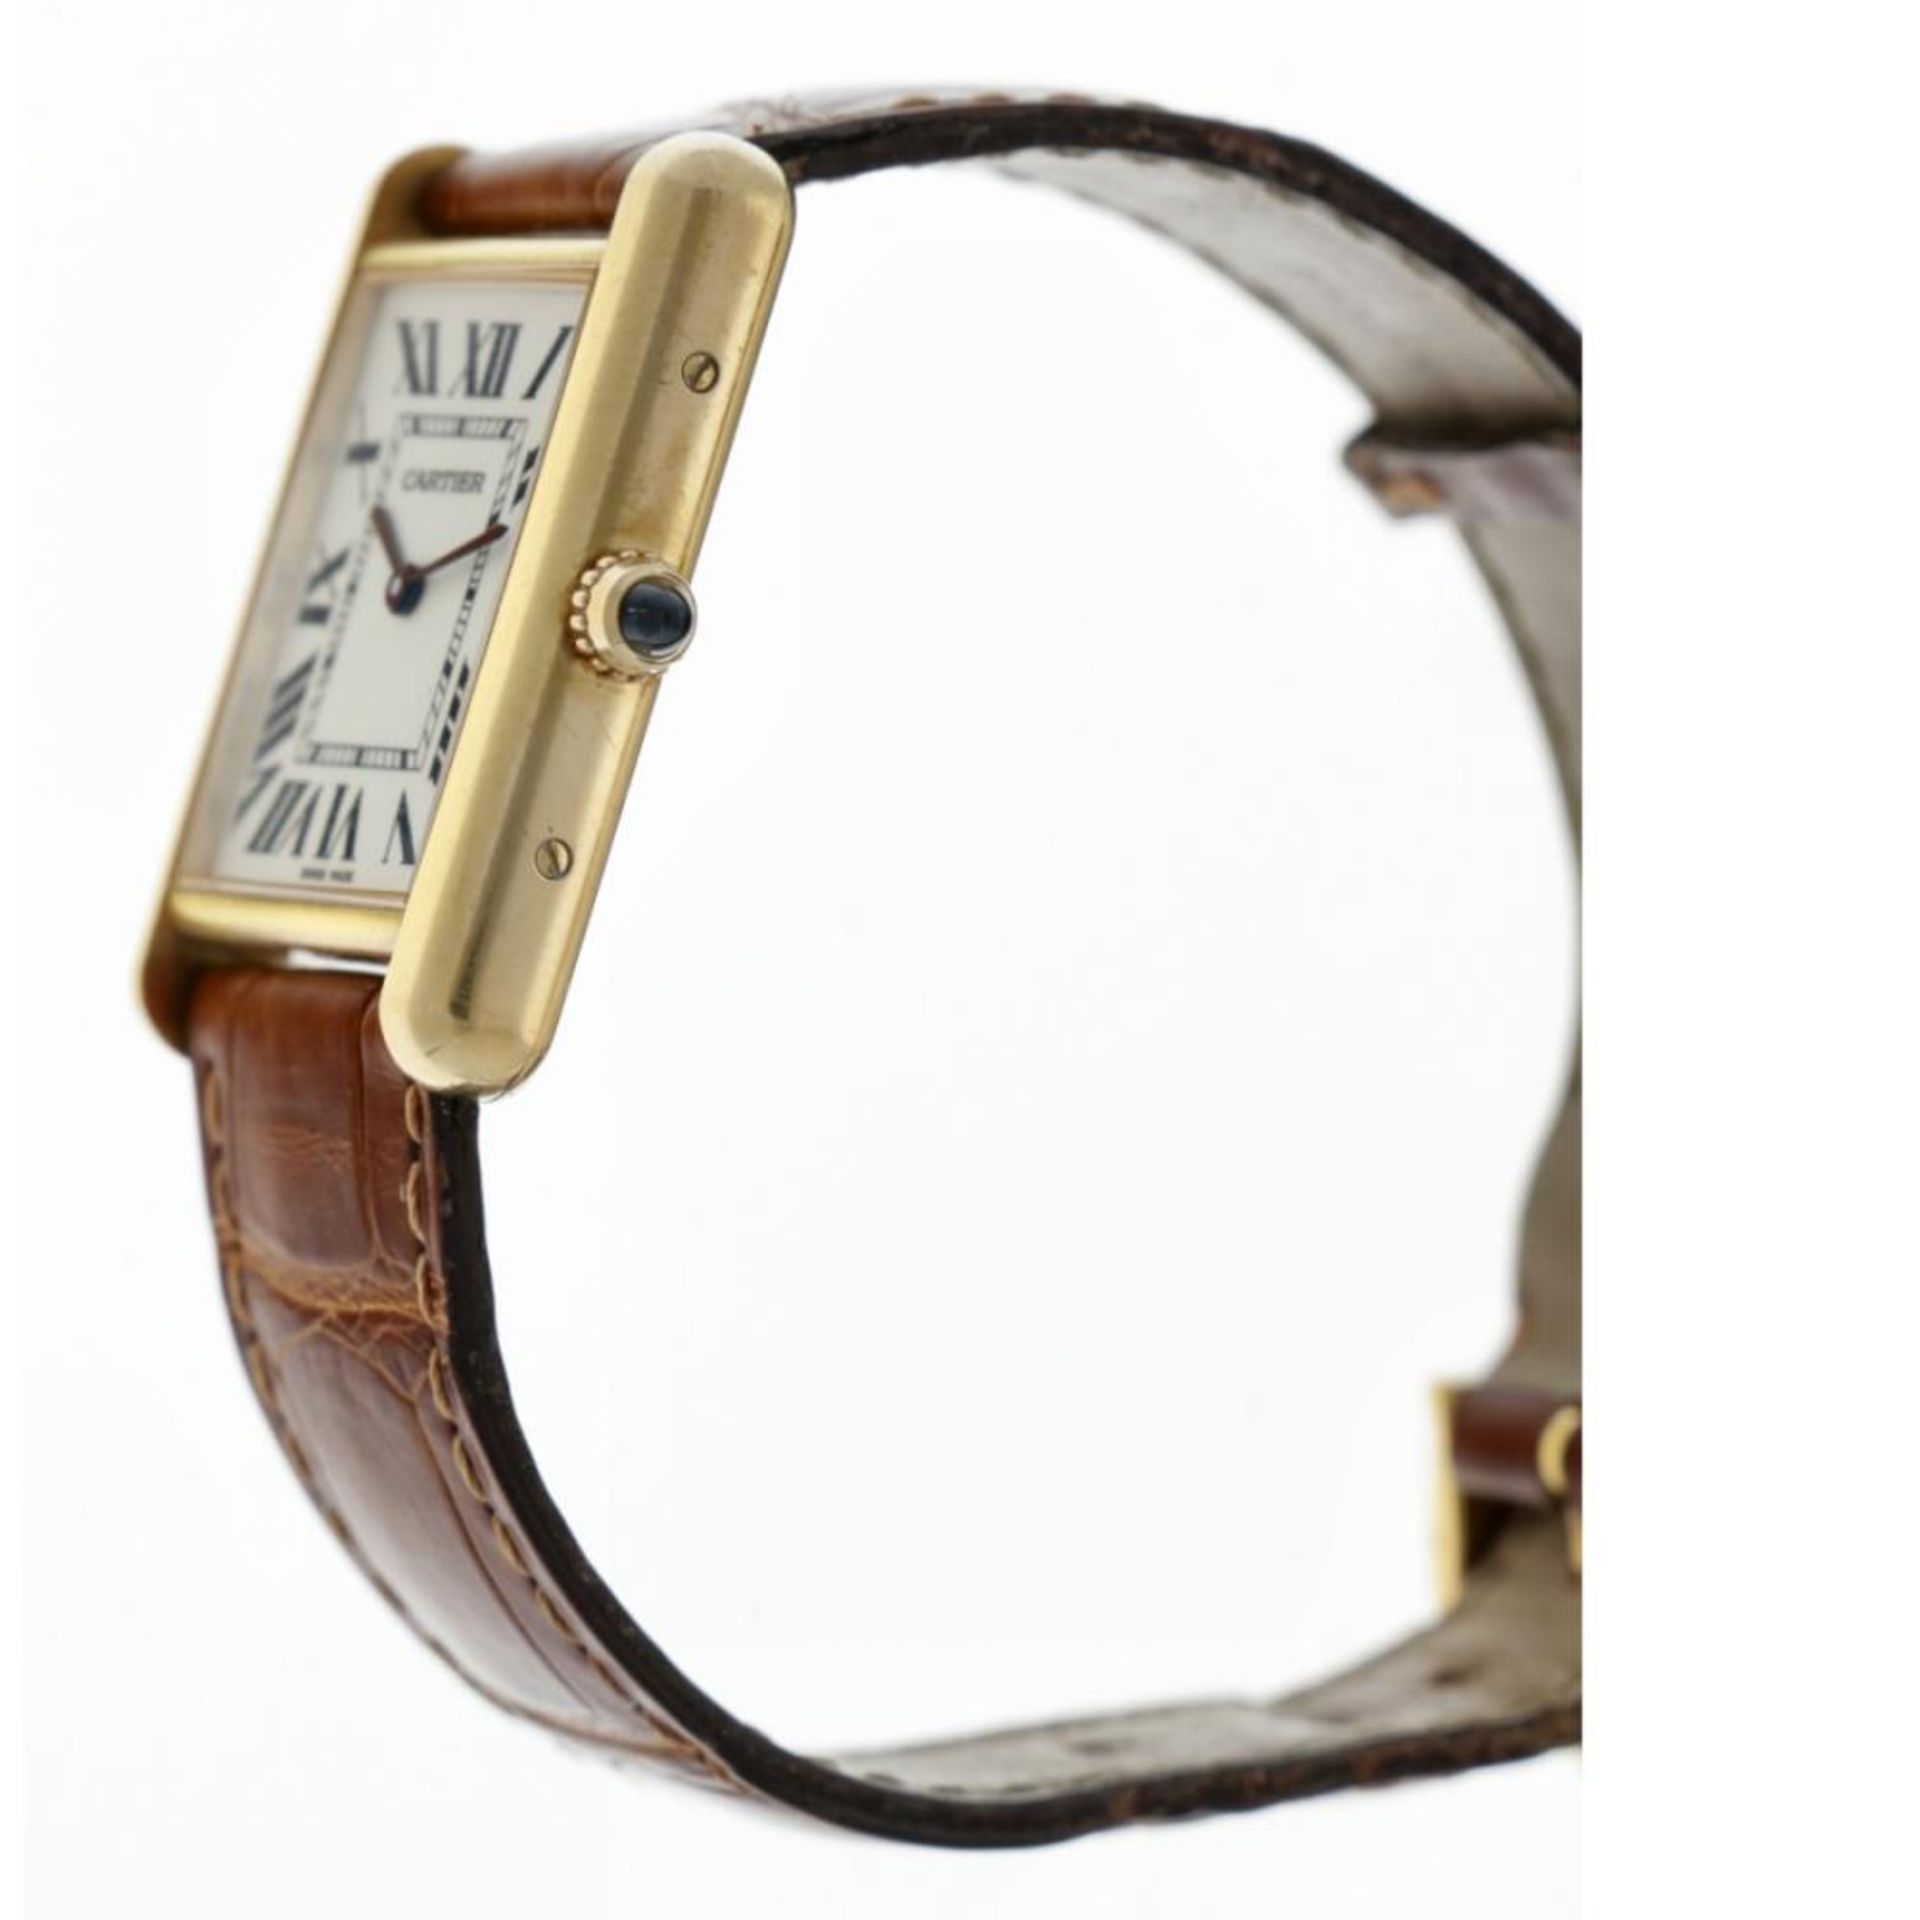 Cartier Tank Louis 2441 - 18 carat gold - Men's watch - approx. 2005. - Image 9 of 10